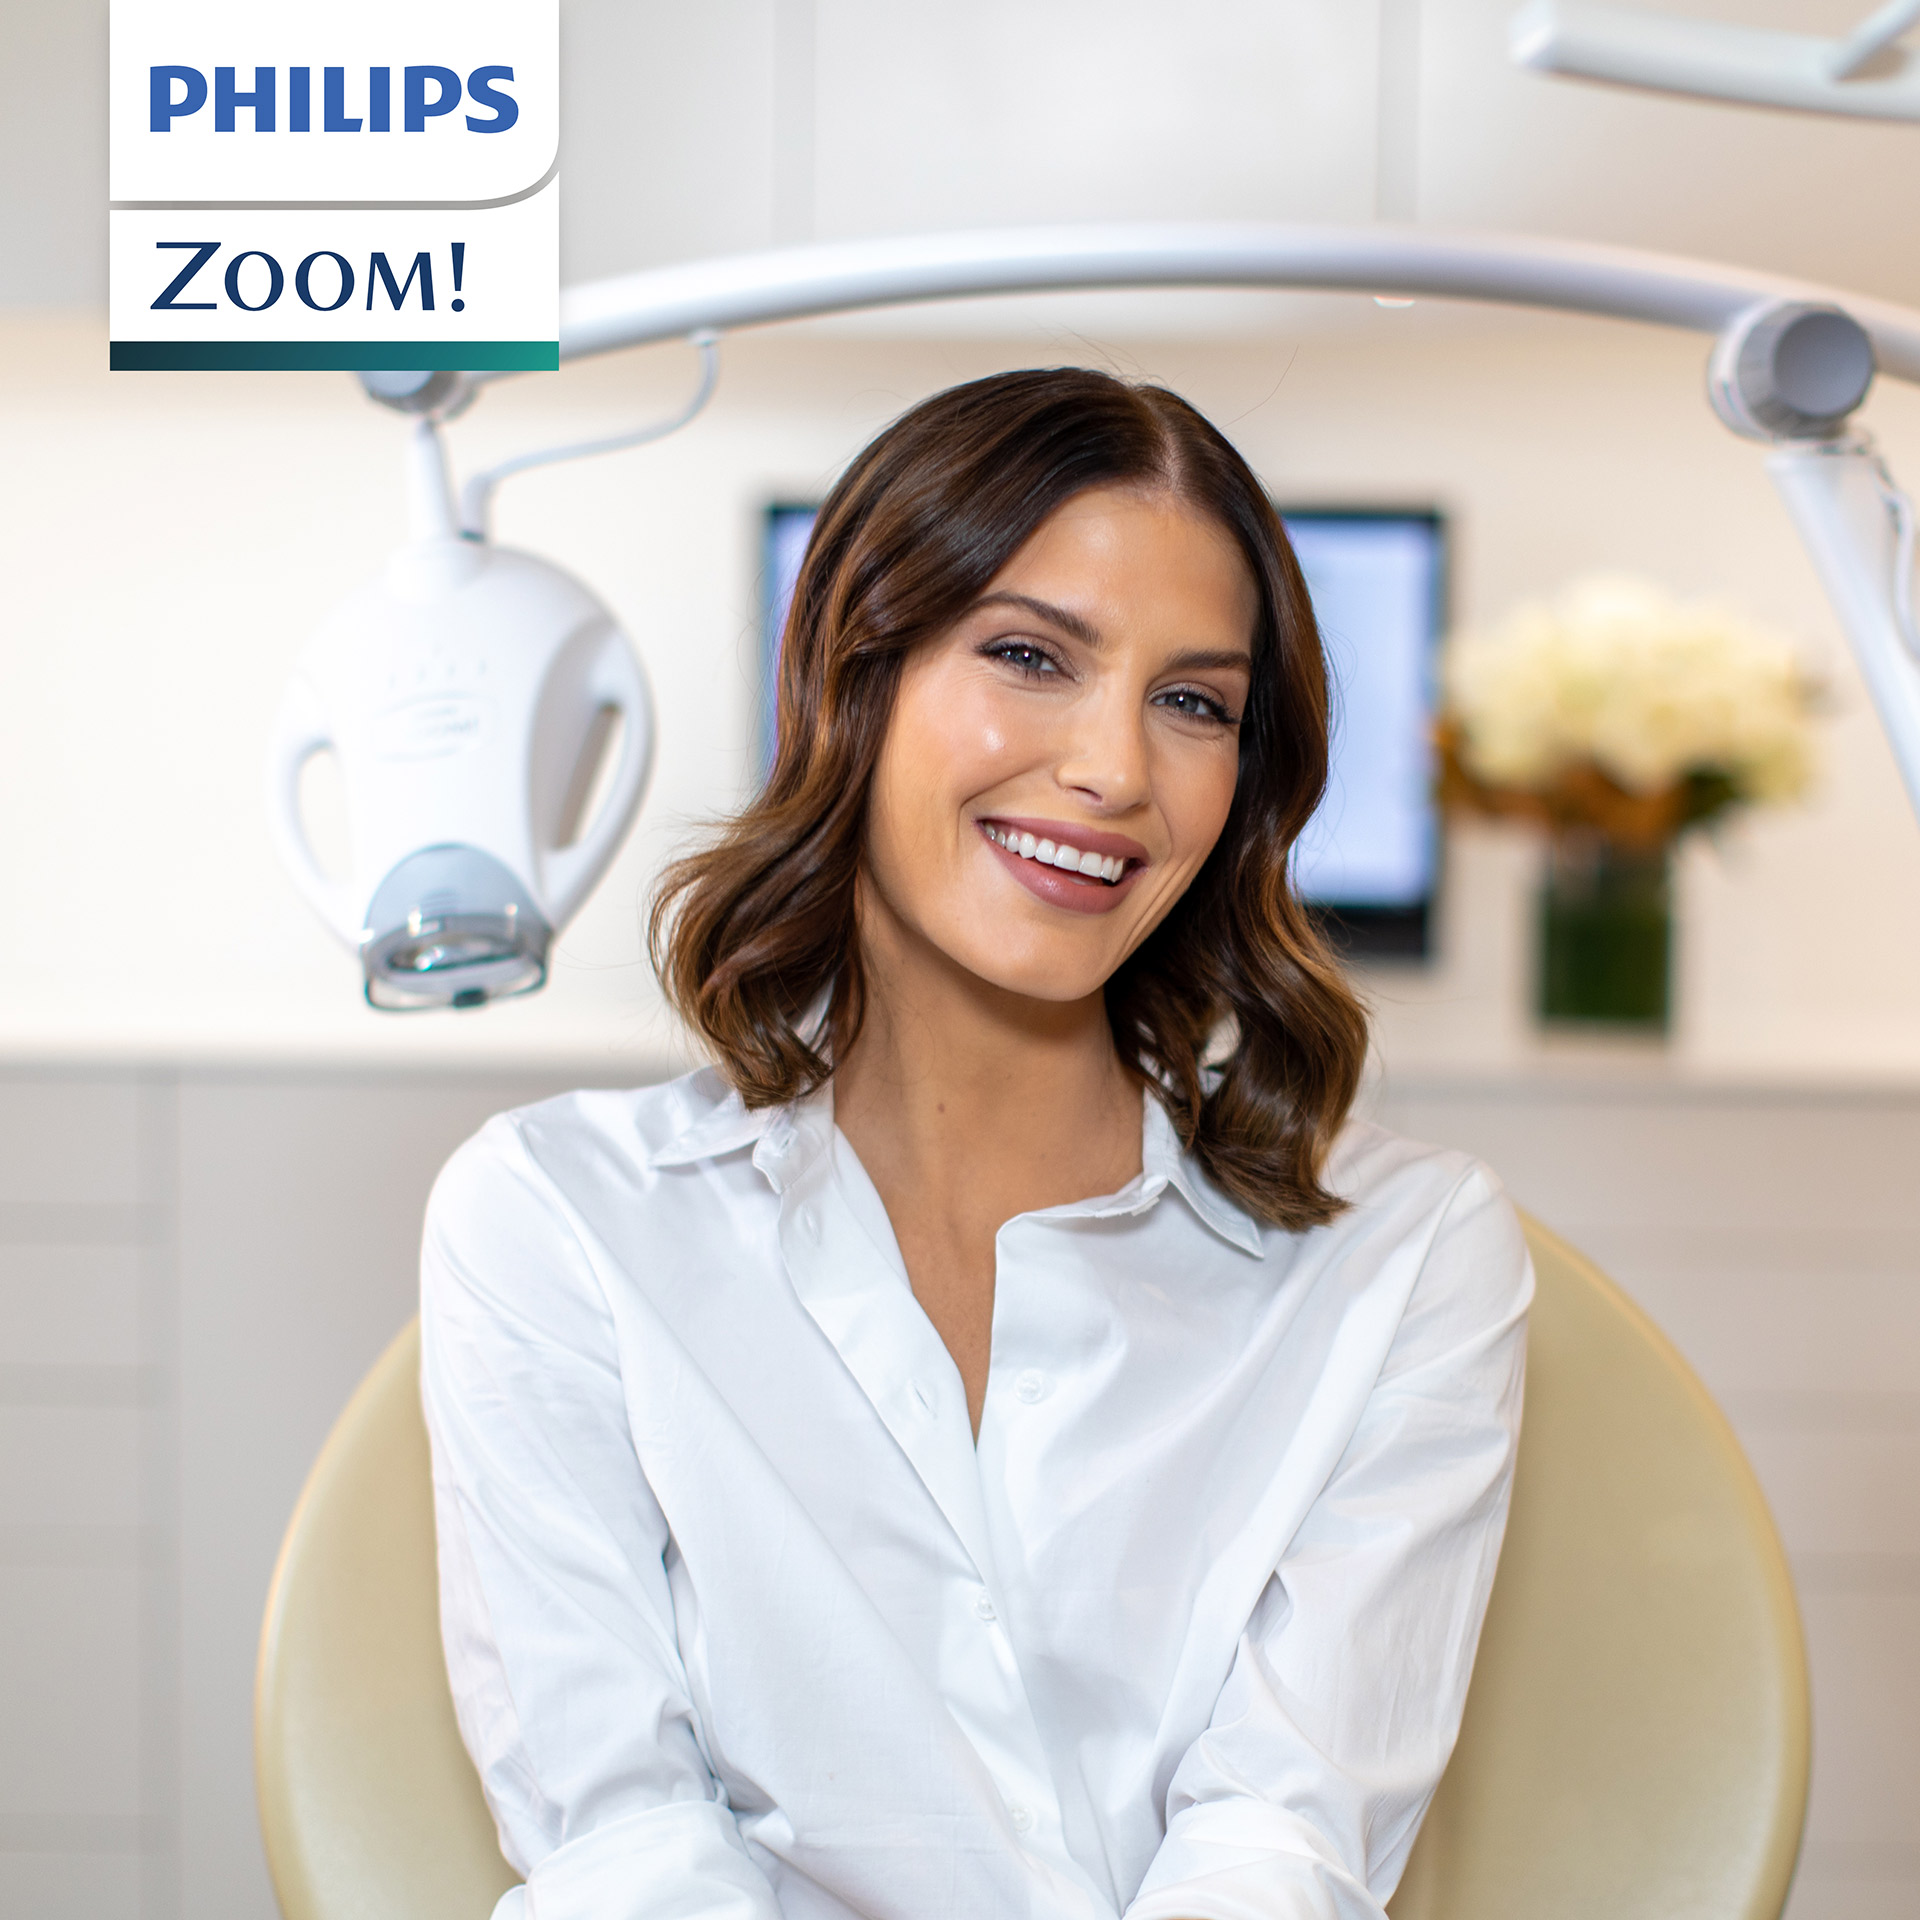 Zoom teeth whitening at TFI Dentistry Gold Coast 07 5528 8222